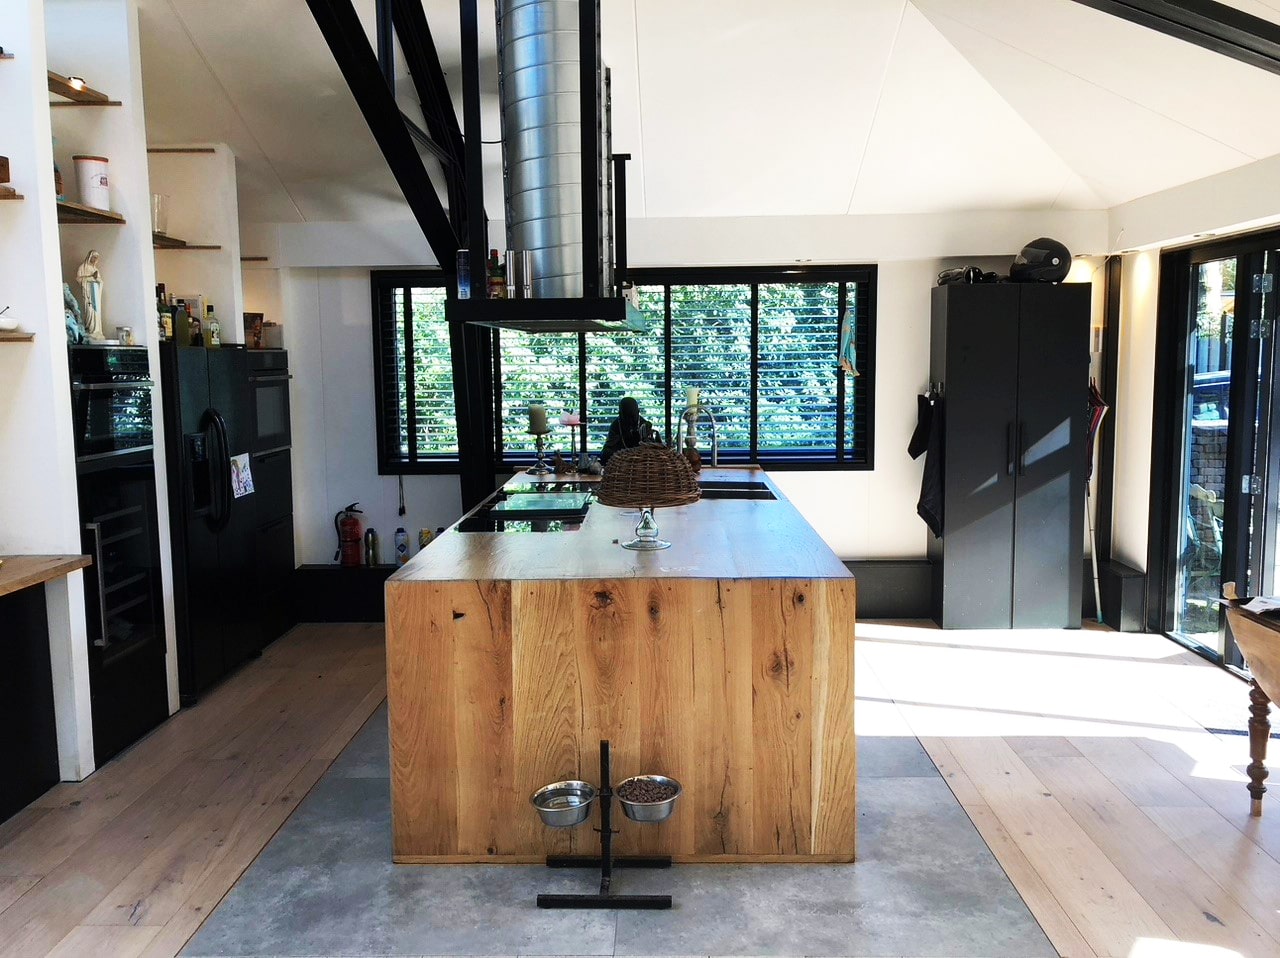 Keukeninspiratie - hout in de keuken - betonlook vloertegels in moderne keuken - RBTegels blog